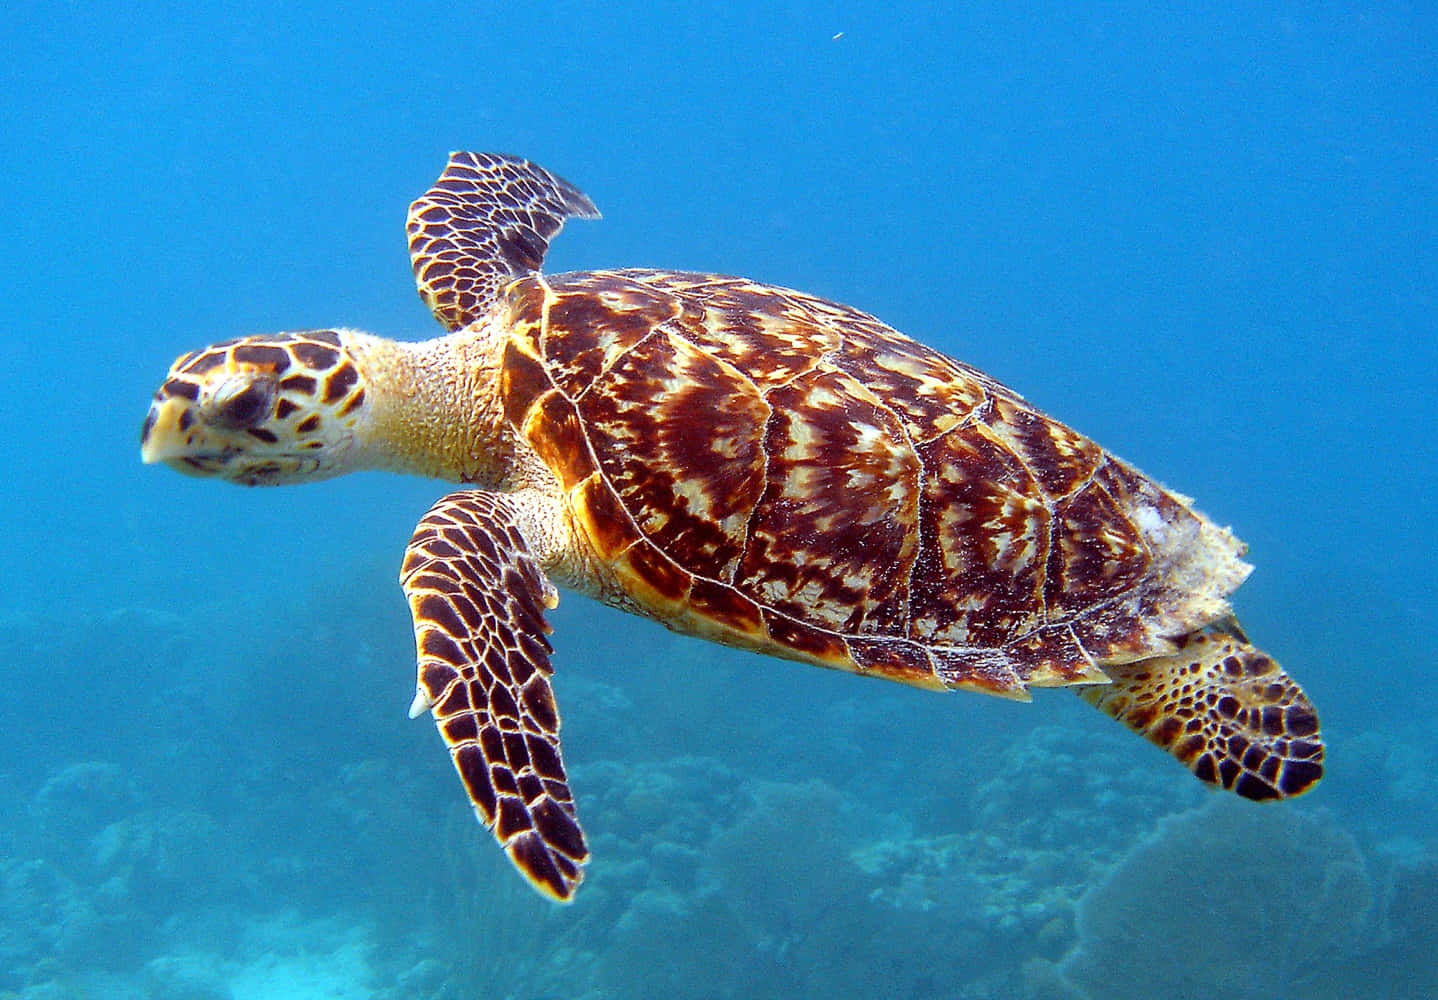 A Sea Turtle soaks up the sun in its beautiful habitat.